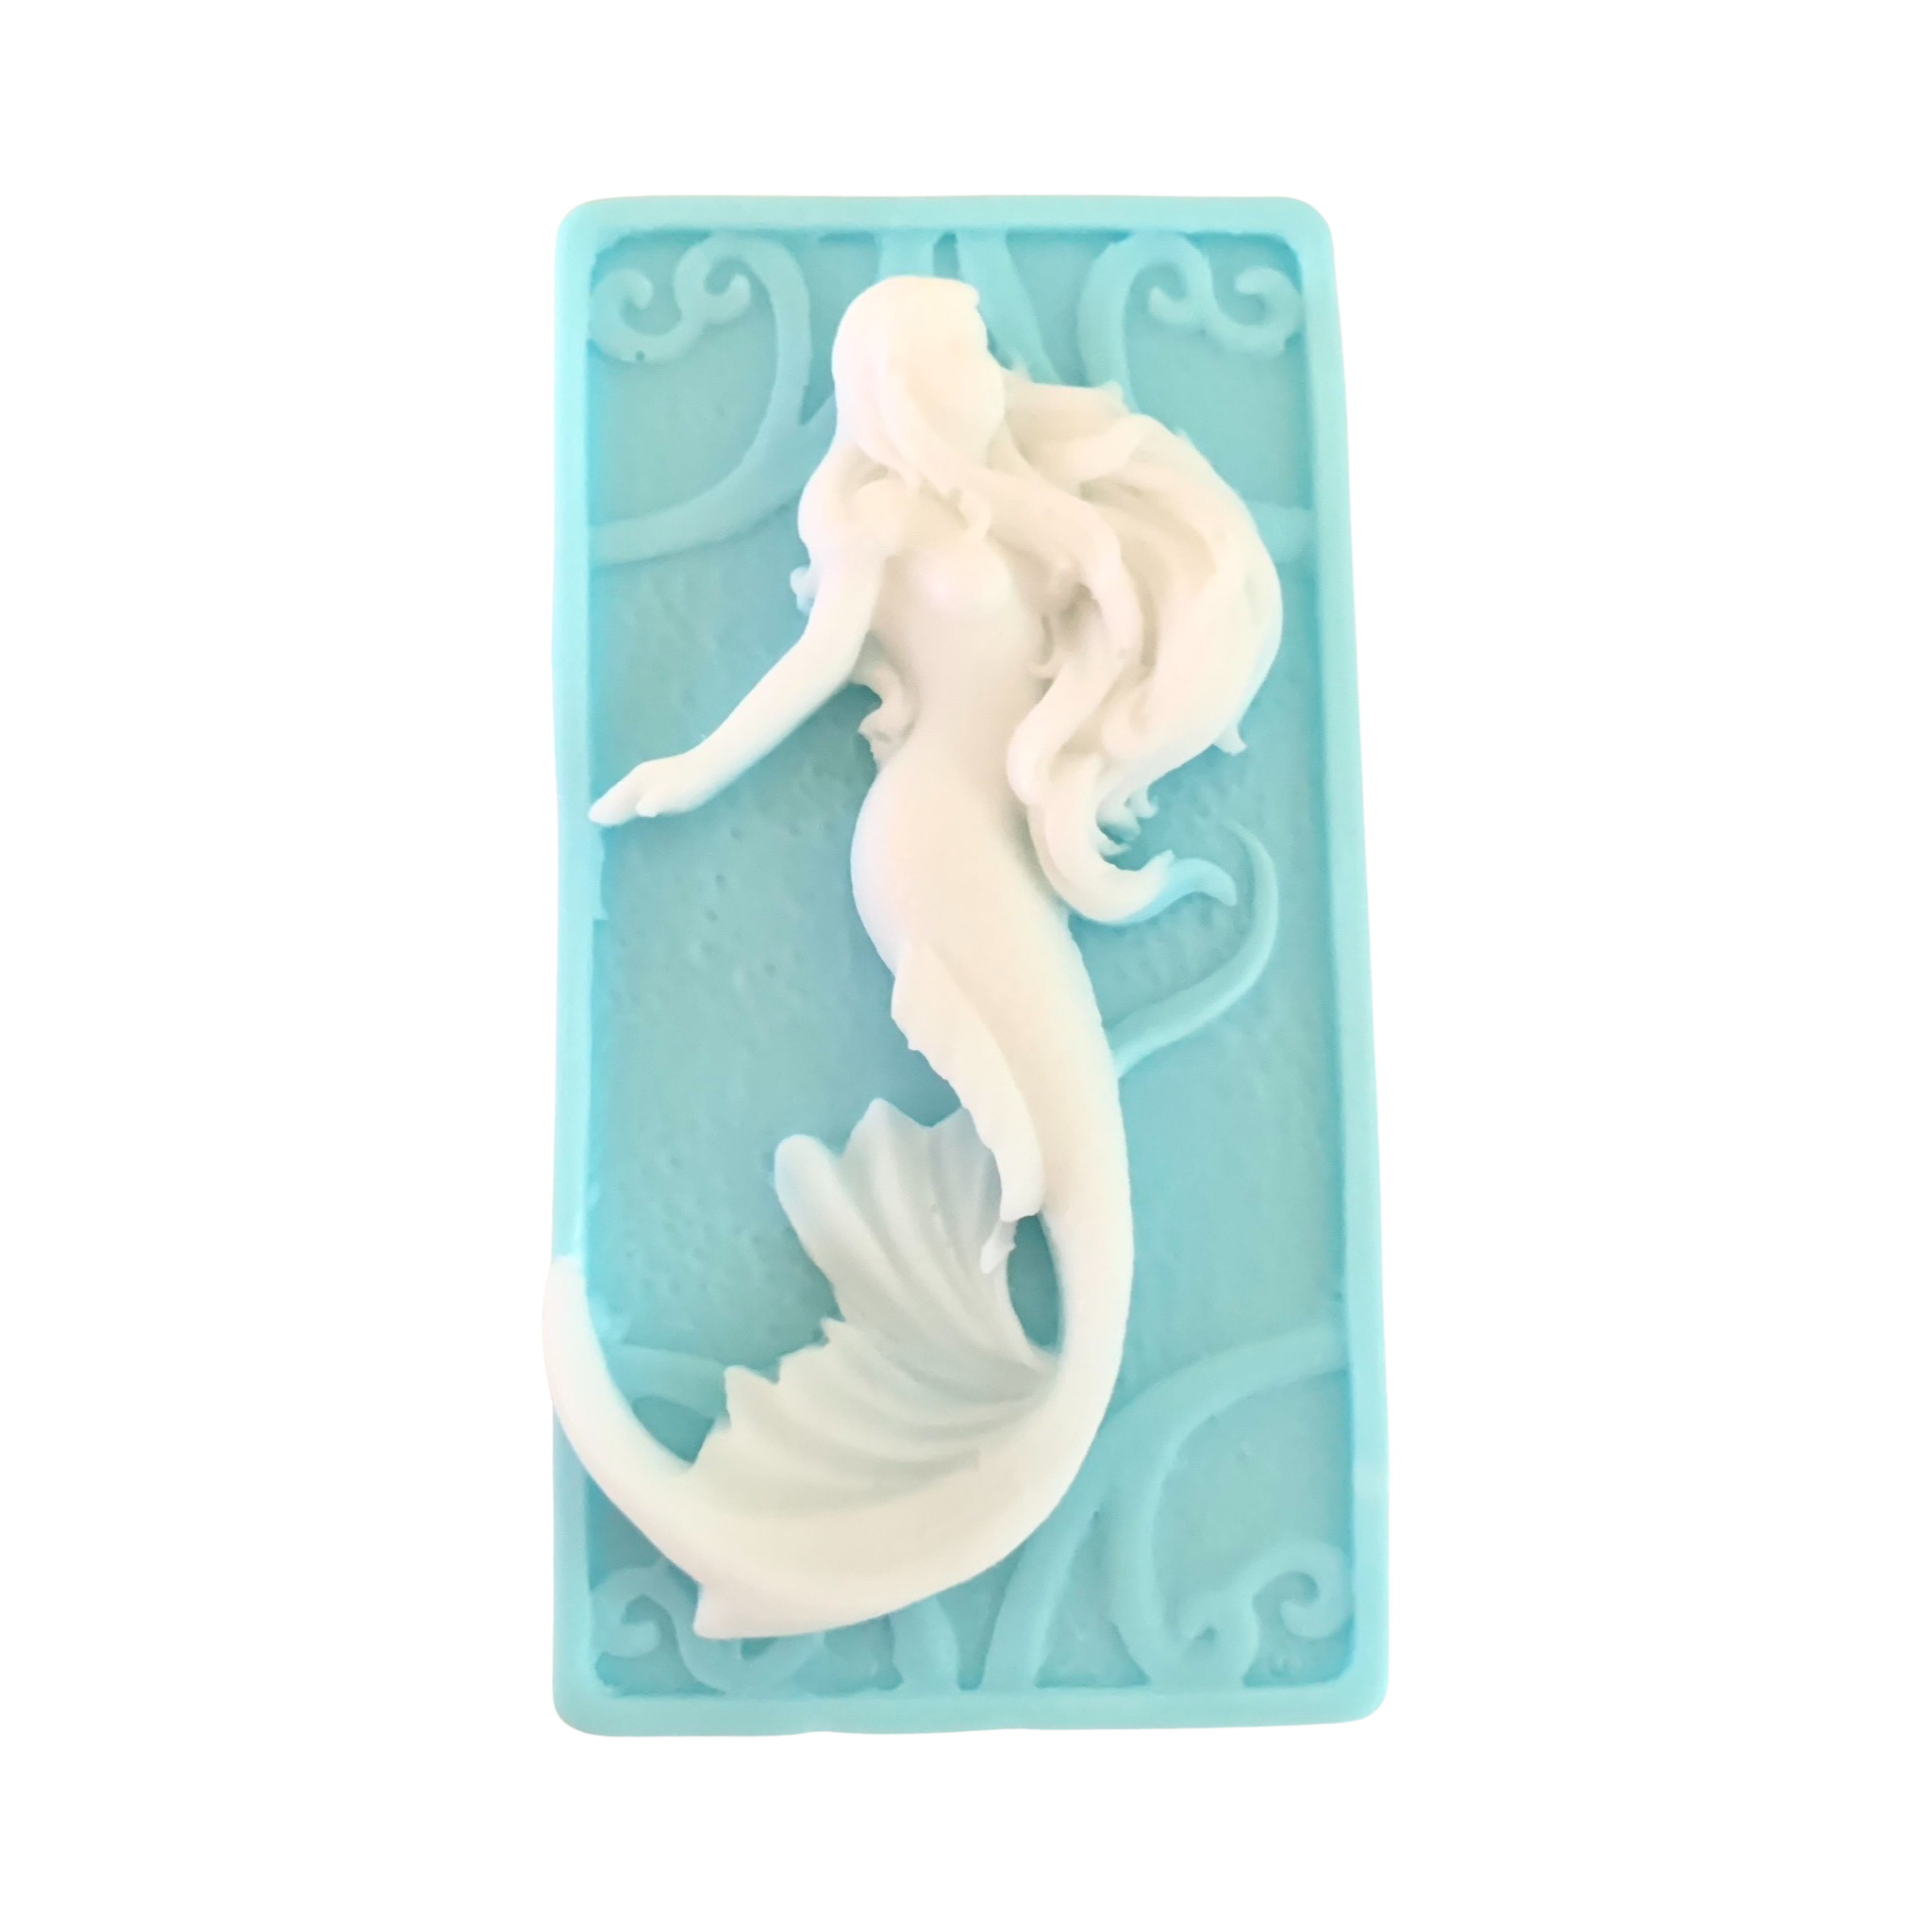 3D Mermaid Bar of Soap:  Ocean and Beach themed soaps